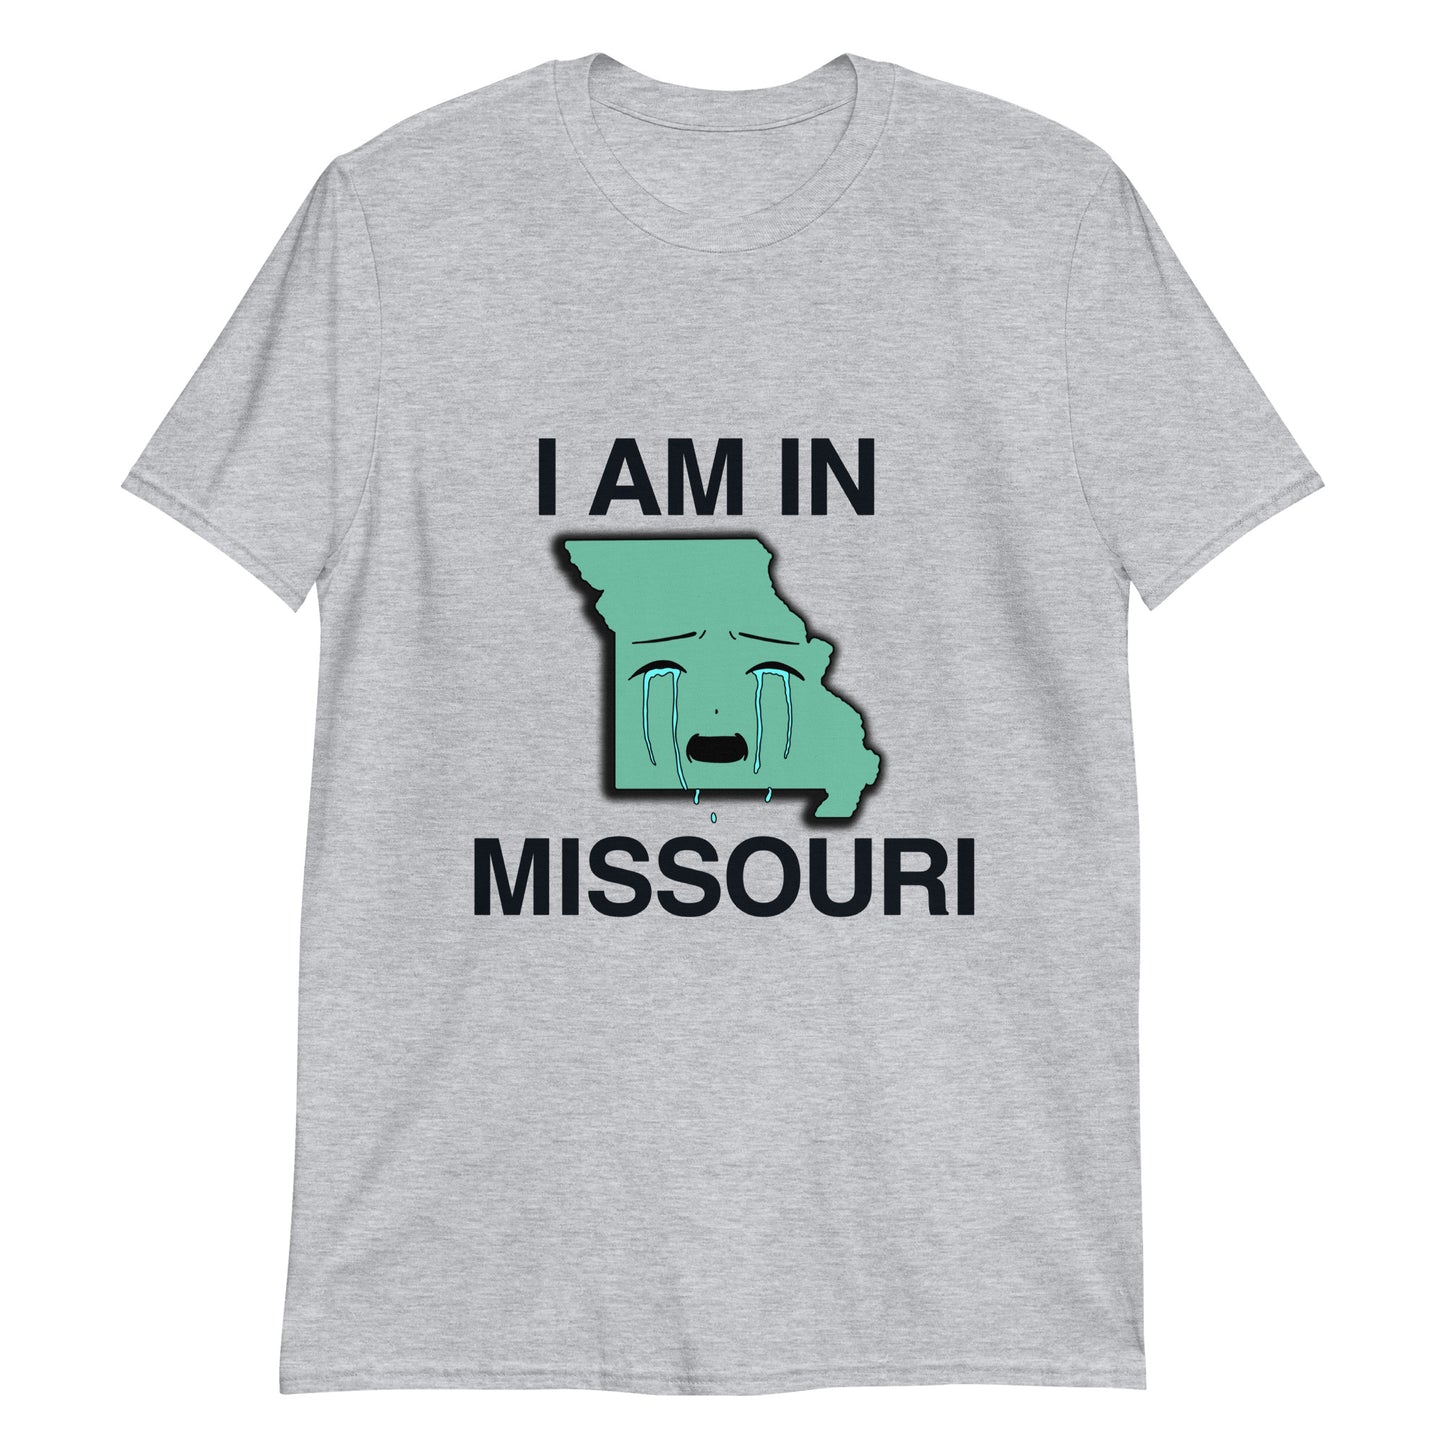 I Am in Missouri.